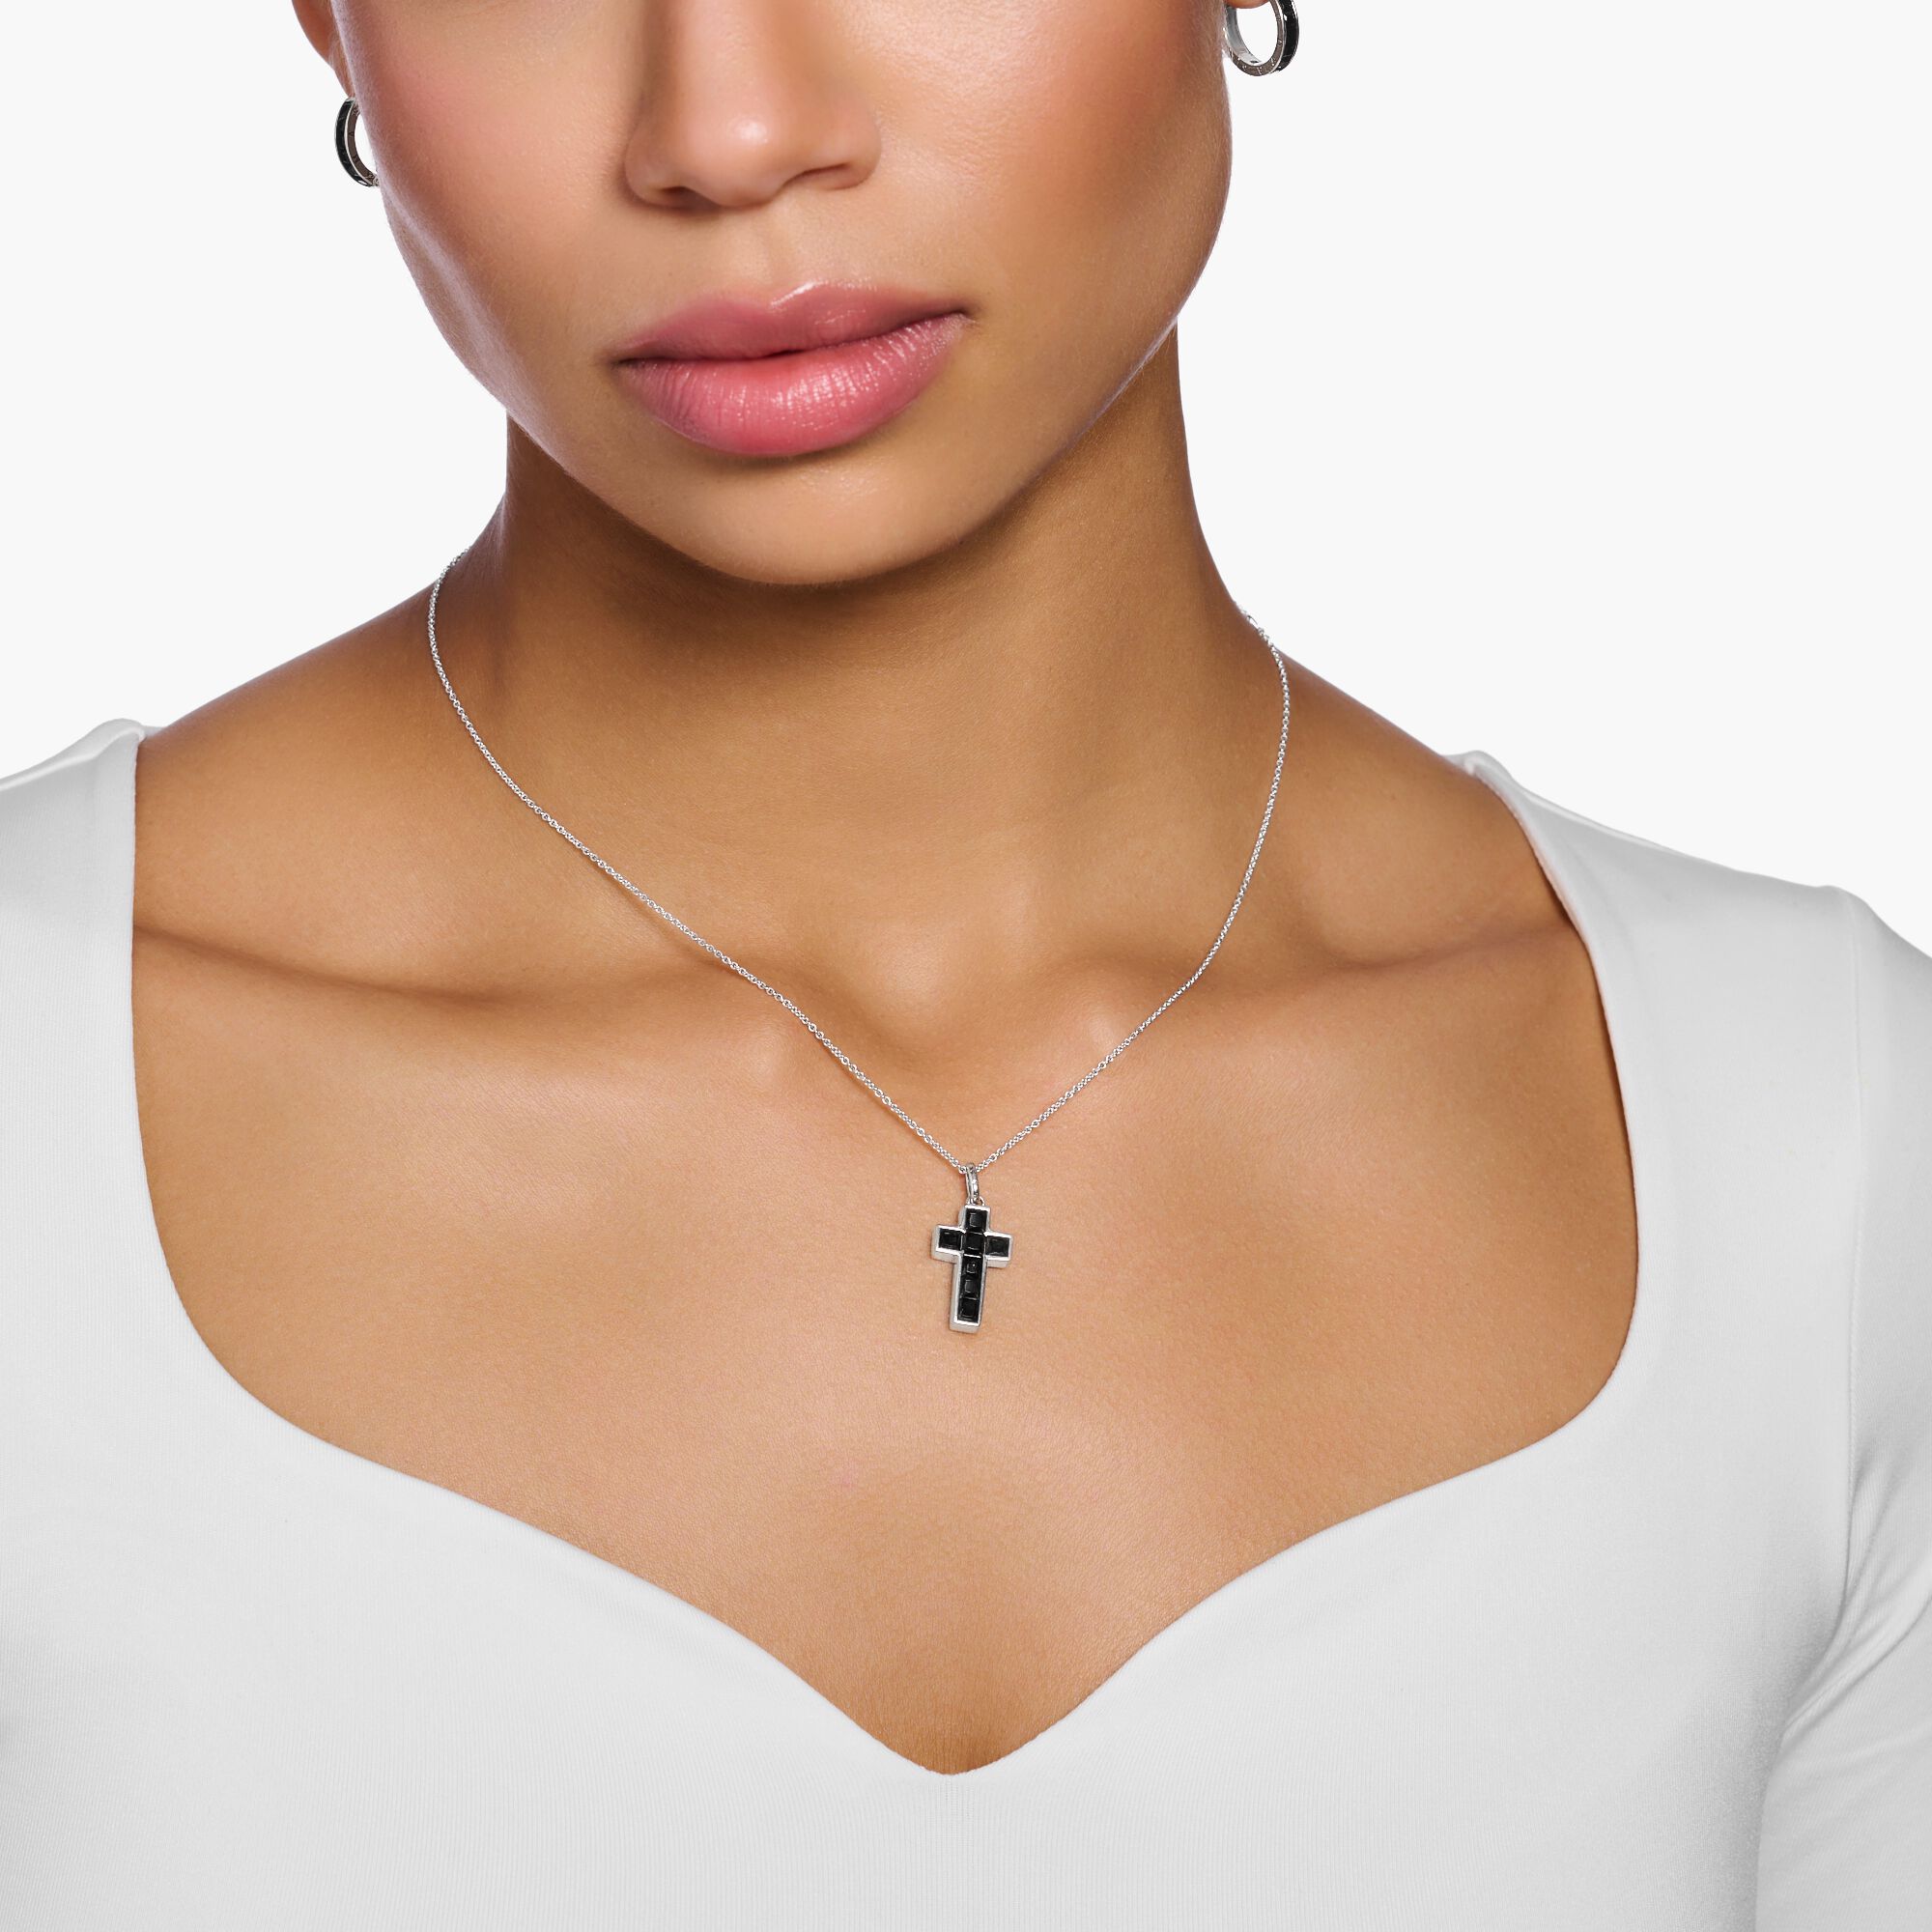 Necklace with cross pendant, black stones | THOMAS SABO